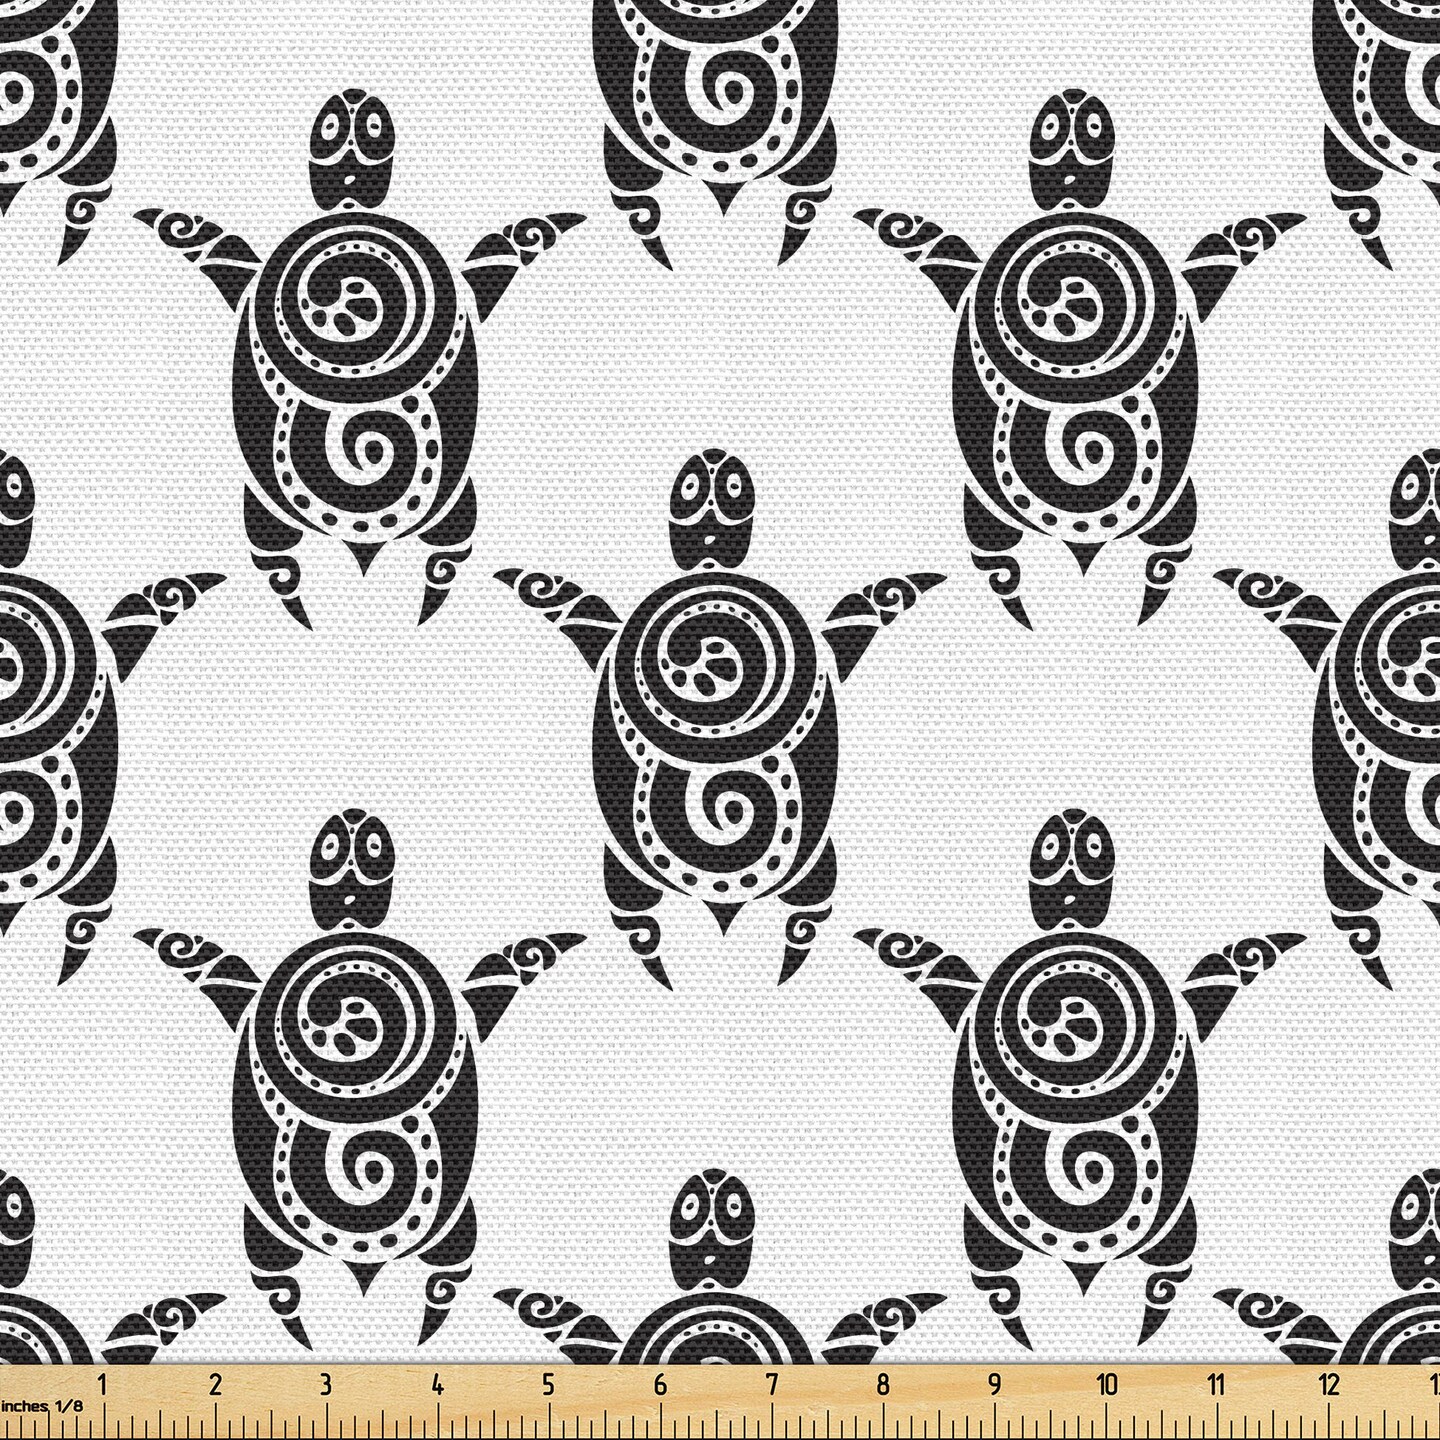 Polynesian hawaiian style tribal tattoo fabric vector seamless pattern   Stock Image  Everypixel